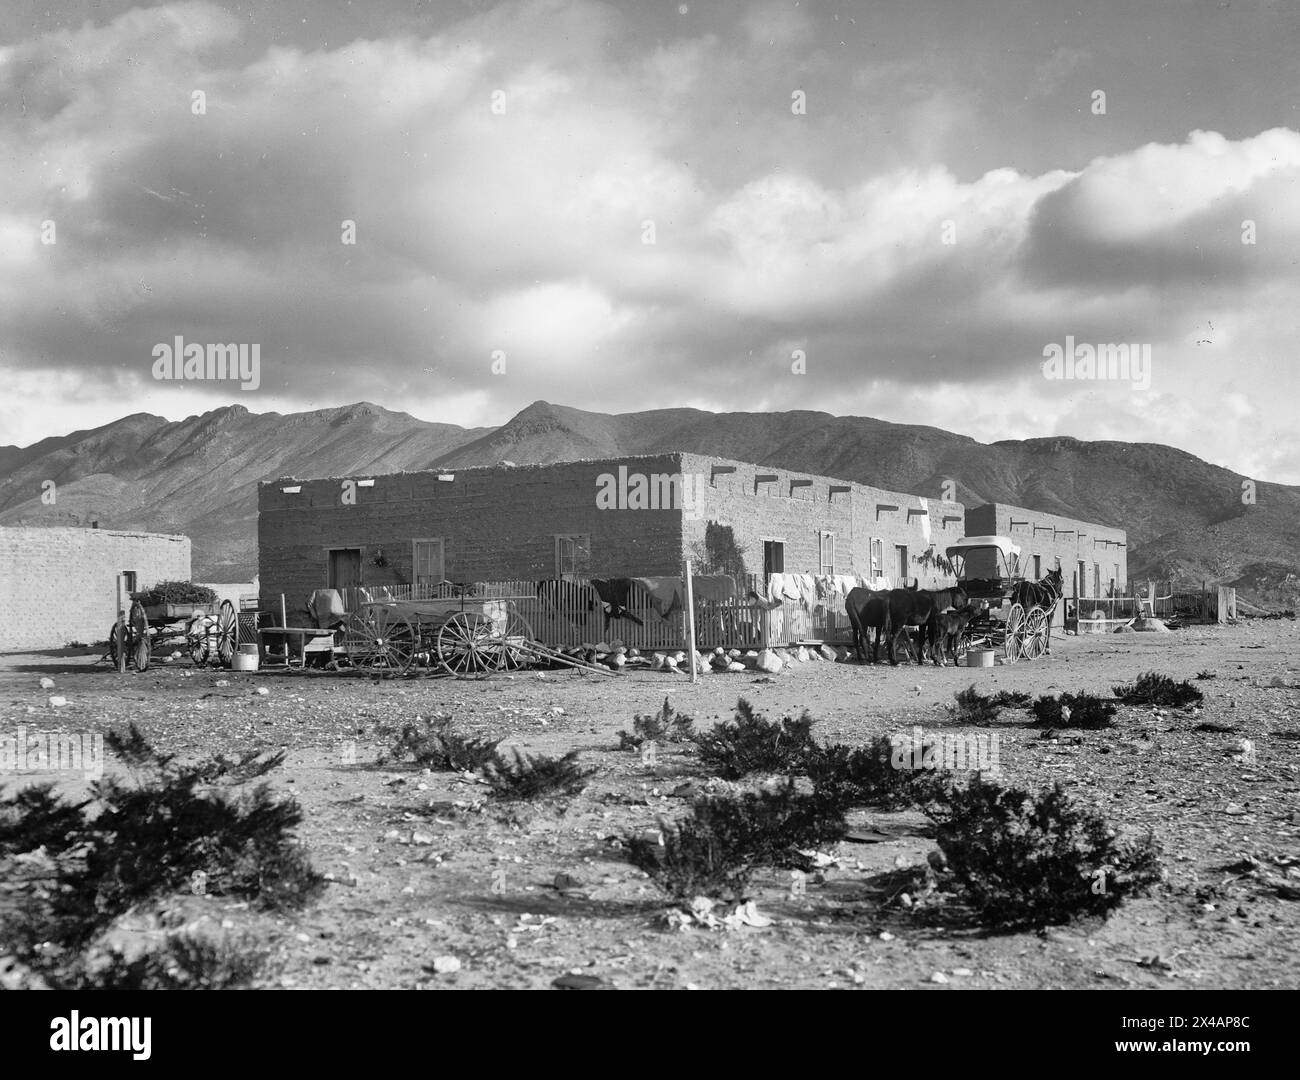 Mexikanisches lehmhaus, Mt. Franklin in der Ferne, El Paso, Texas, 1907 Stockfoto